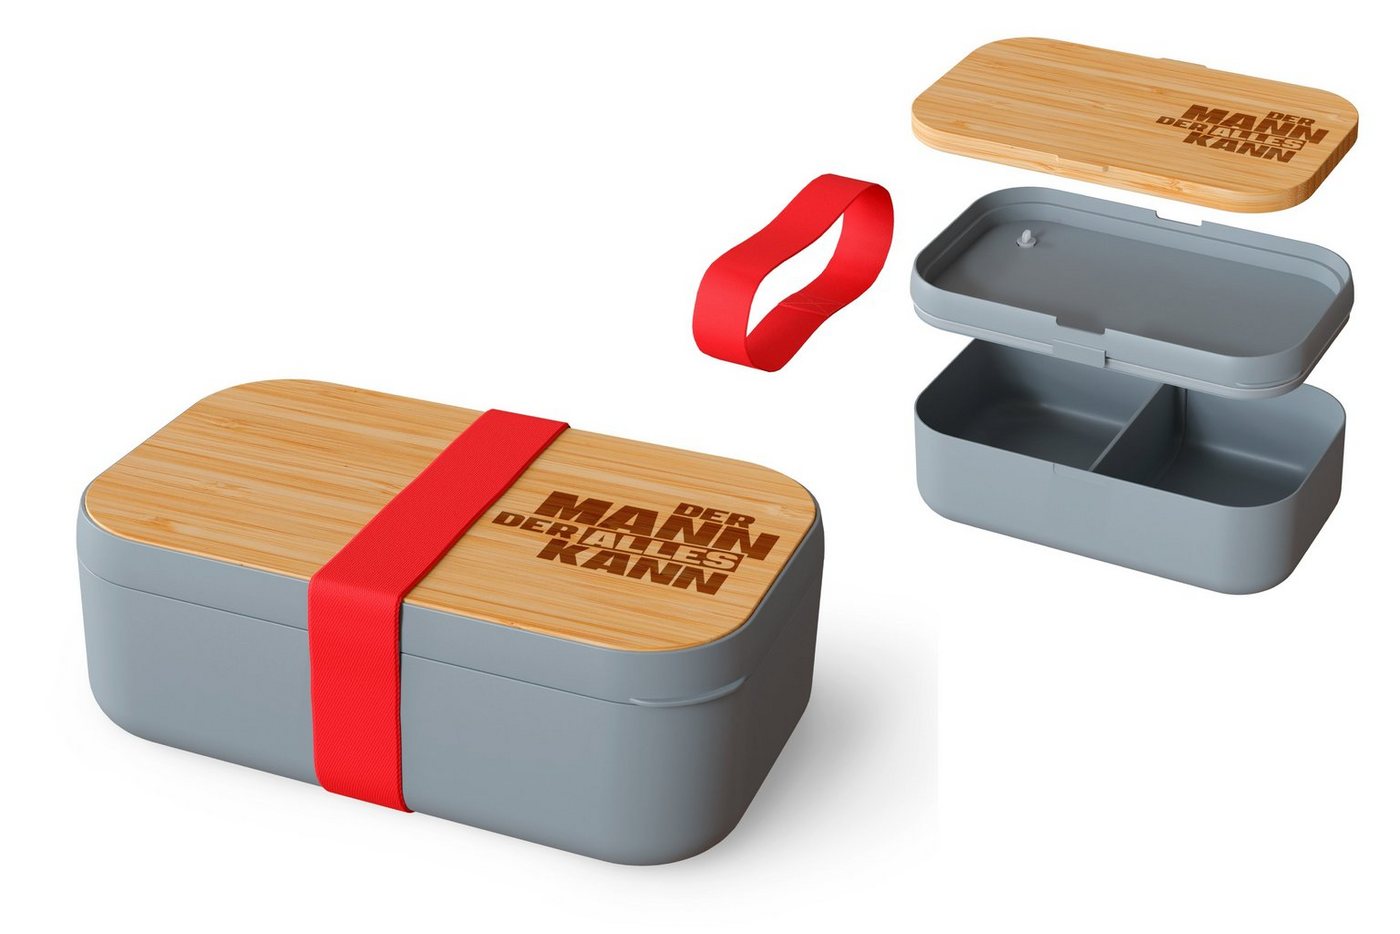 La Vida Lunchbox Brotdose Brotbox Vesperdose Lunchbox la vida Geschenk für Dich) von La Vida